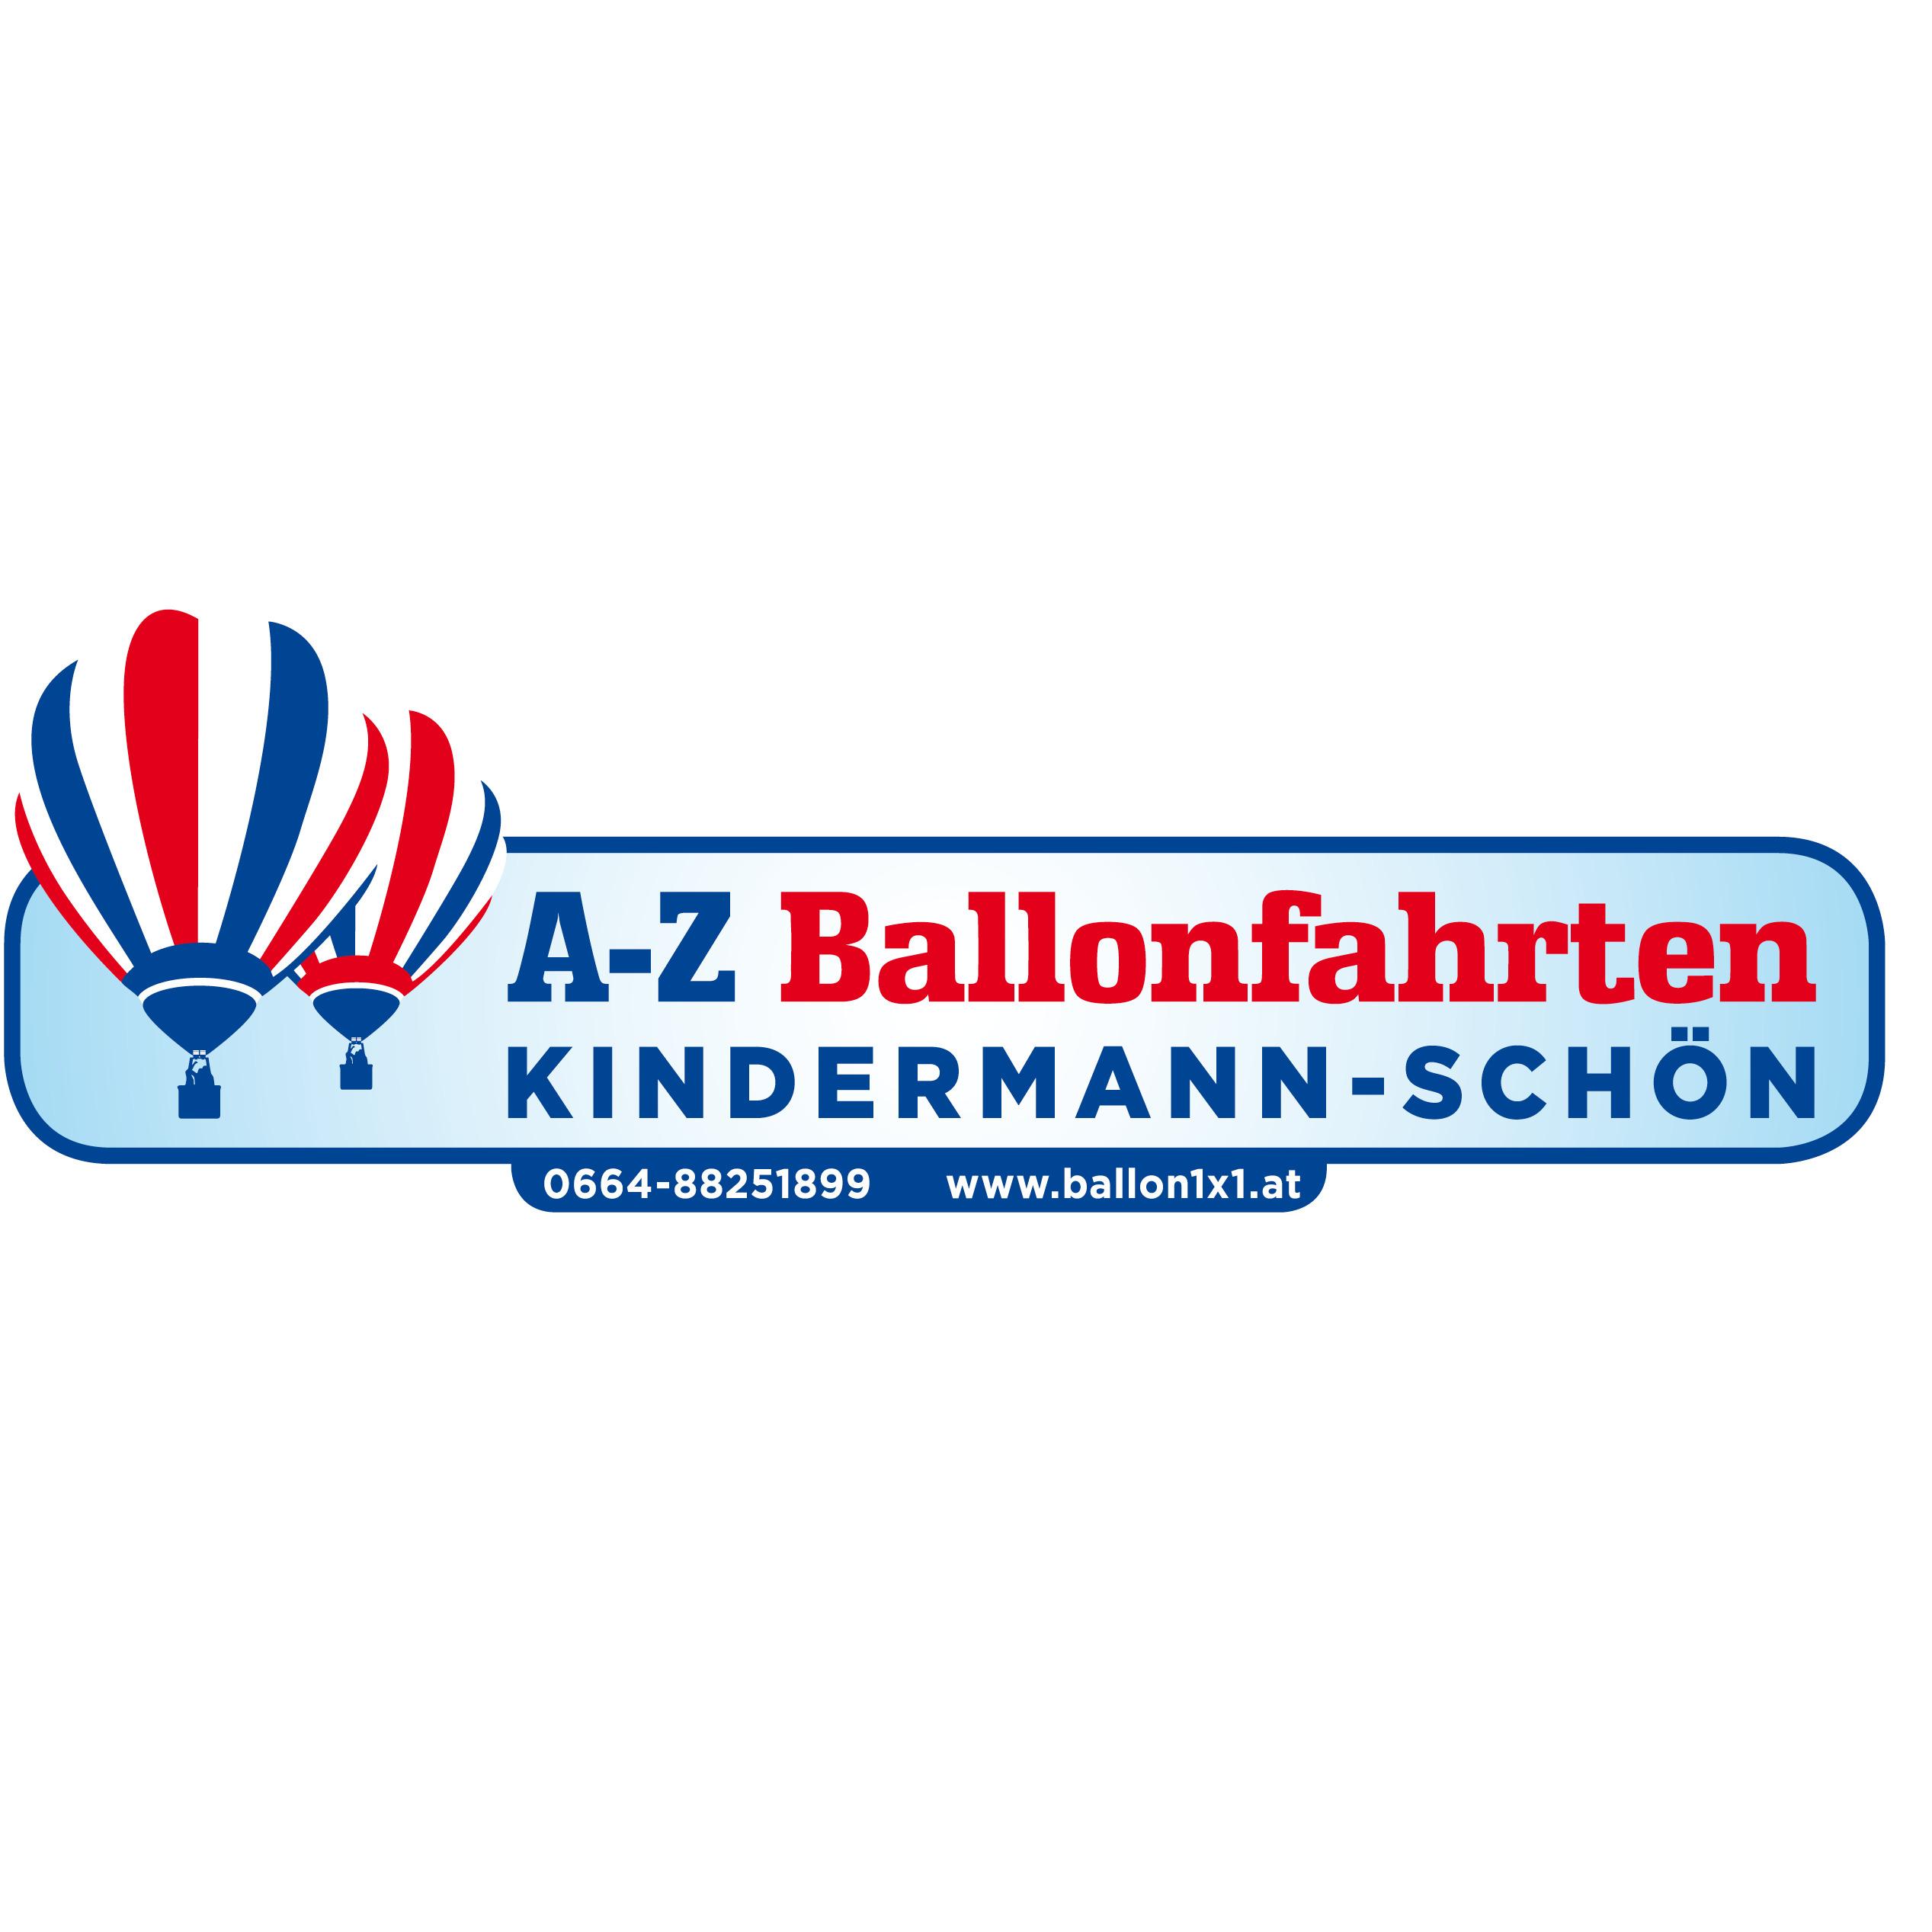 A-Z Ballonfahrten Kindermann-Schön KG - Balloon Ride Tour Agency - Bad Waltersdorf - 0664 88251899 Austria | ShowMeLocal.com